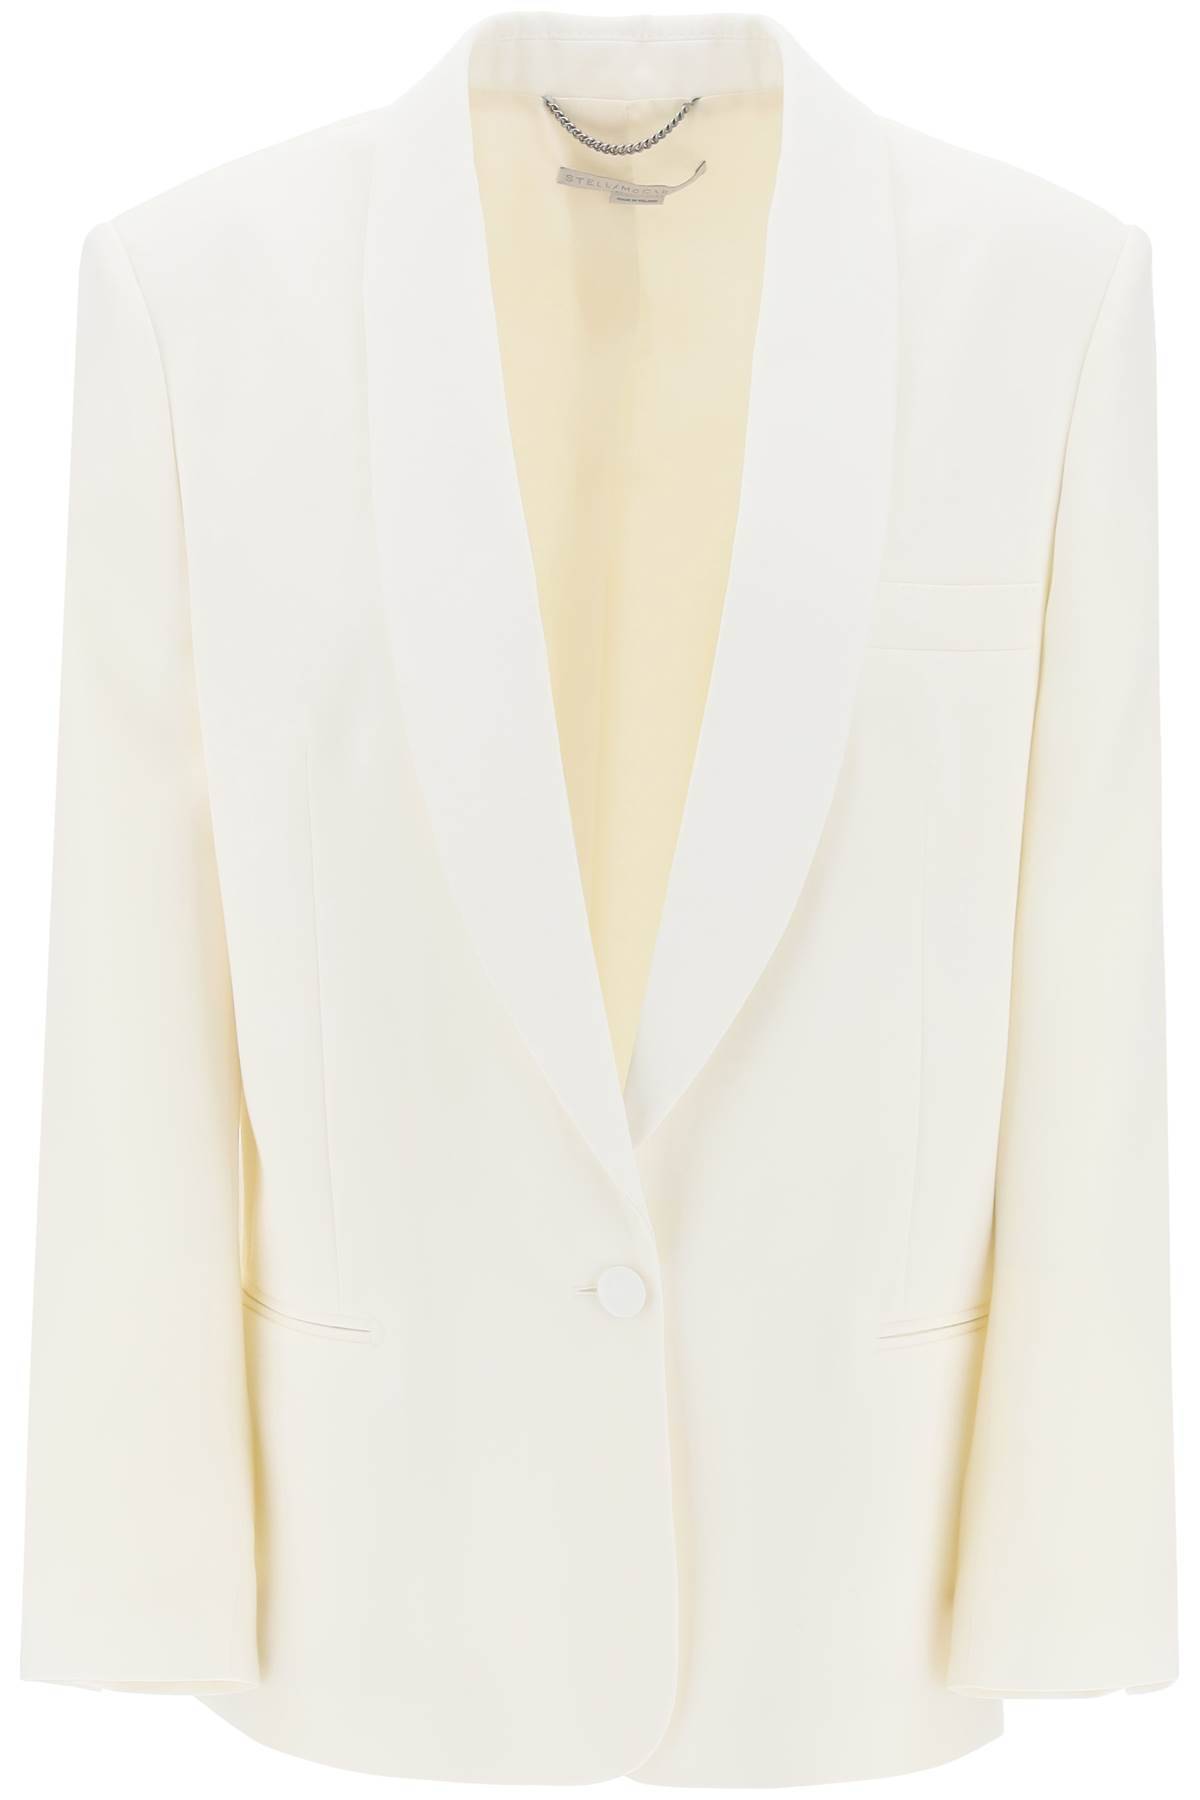 STELLA McCARTNEY single-breasted tailored blazer with sh